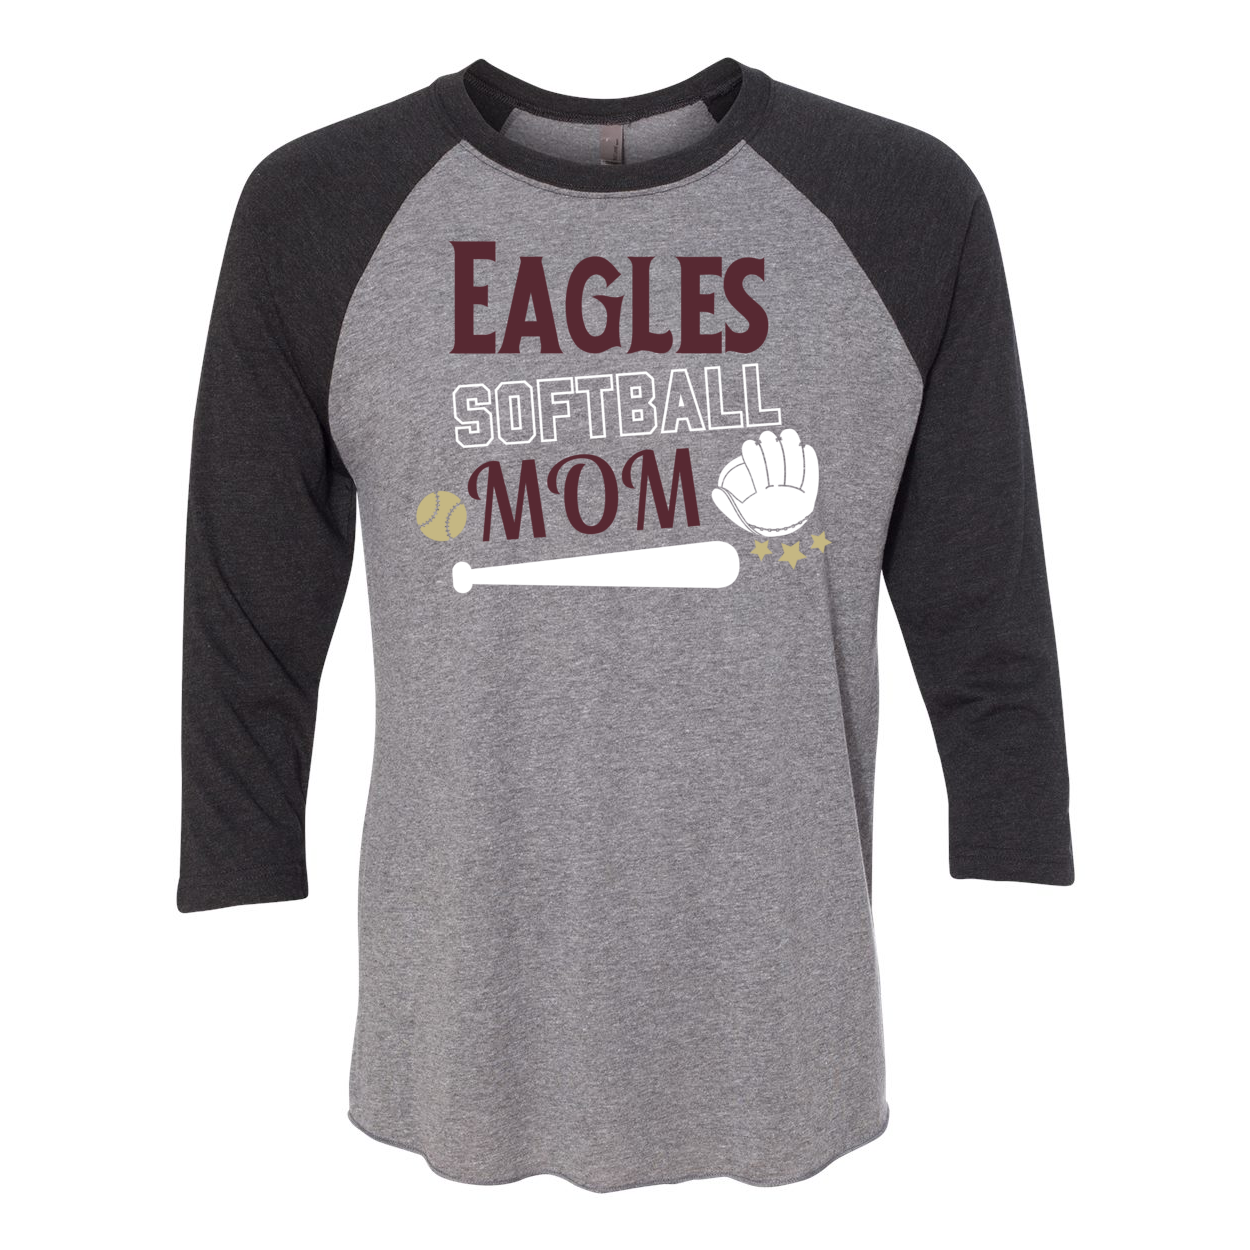 Women's Super Soft Softball Mom Three-Quarter Sleeve Baseball Raglan Tee - New Albany Eagles